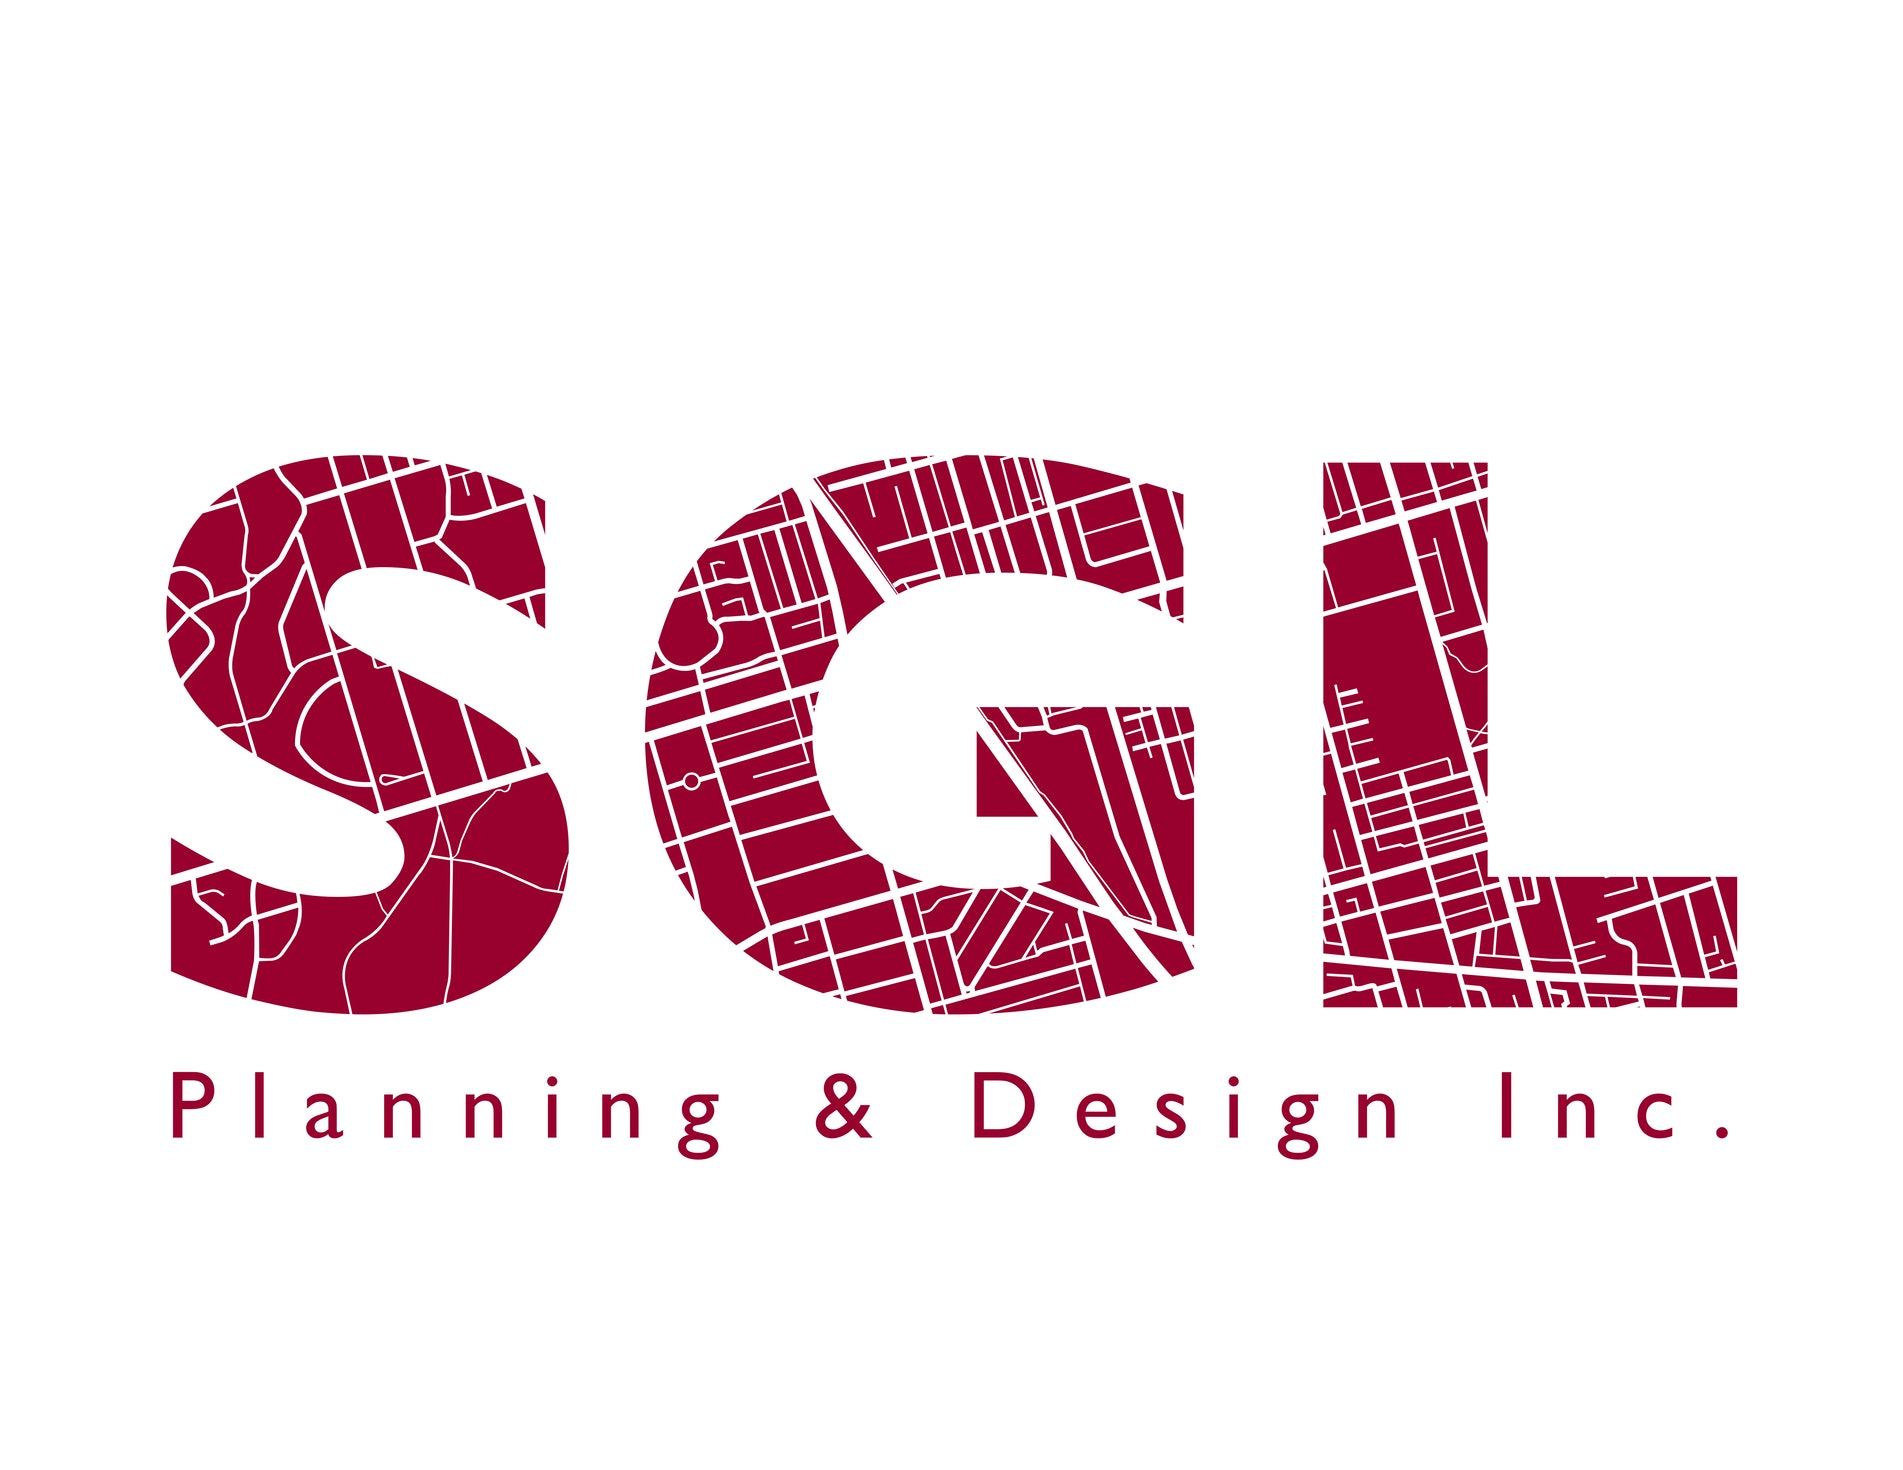 SGL Planning & Design Inc. 